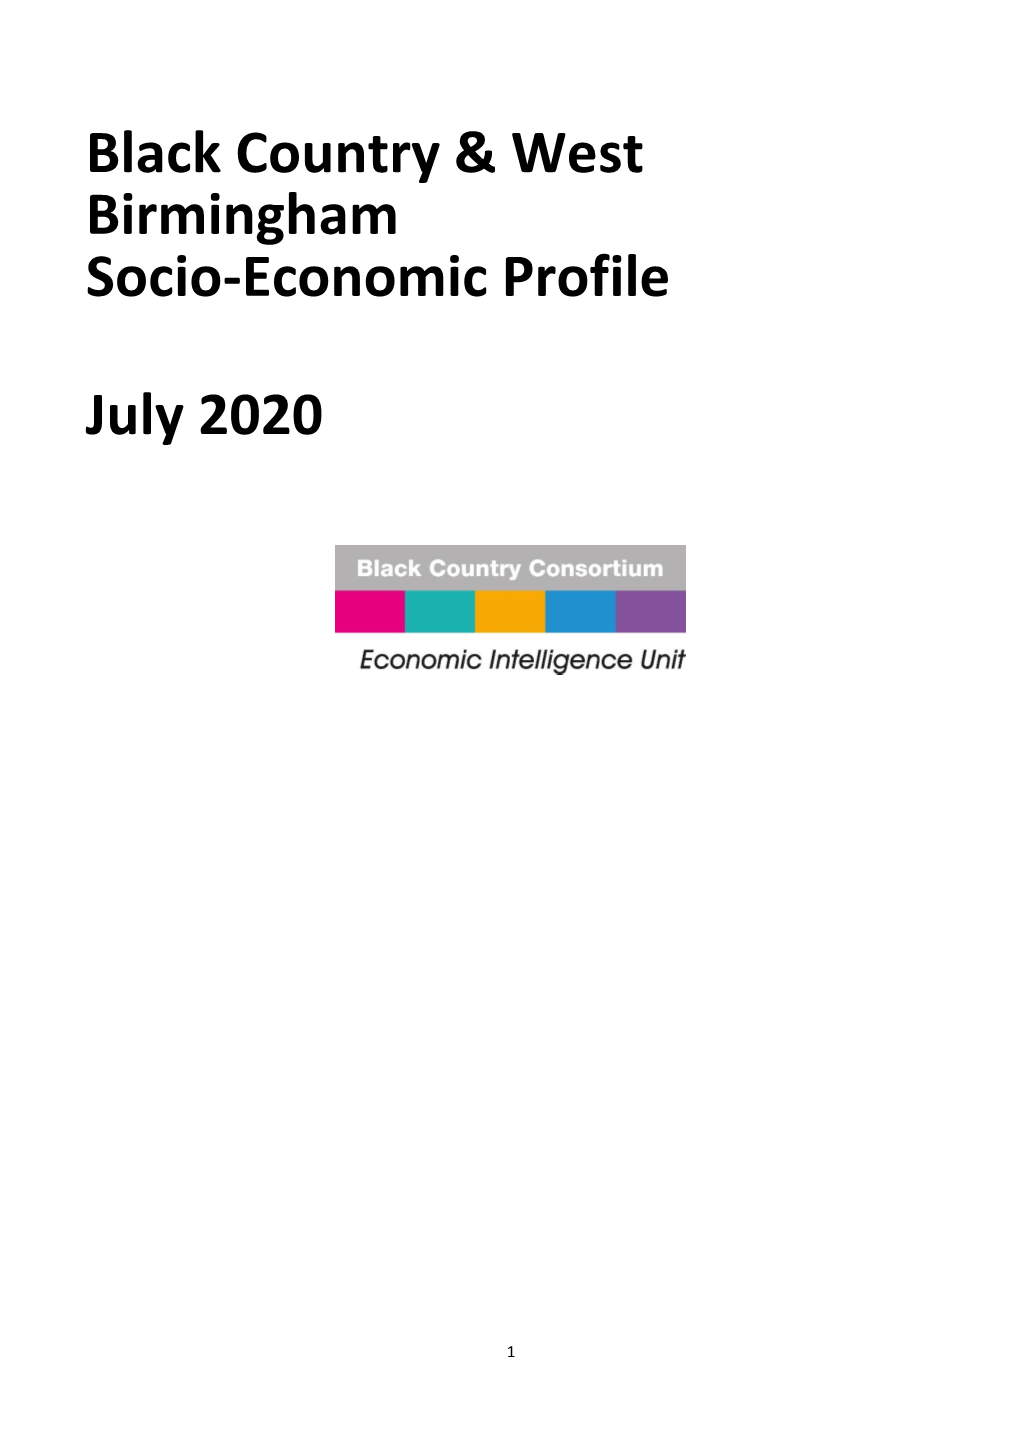 Black Country & West Birmingham Socio-Economic Profile July 2020